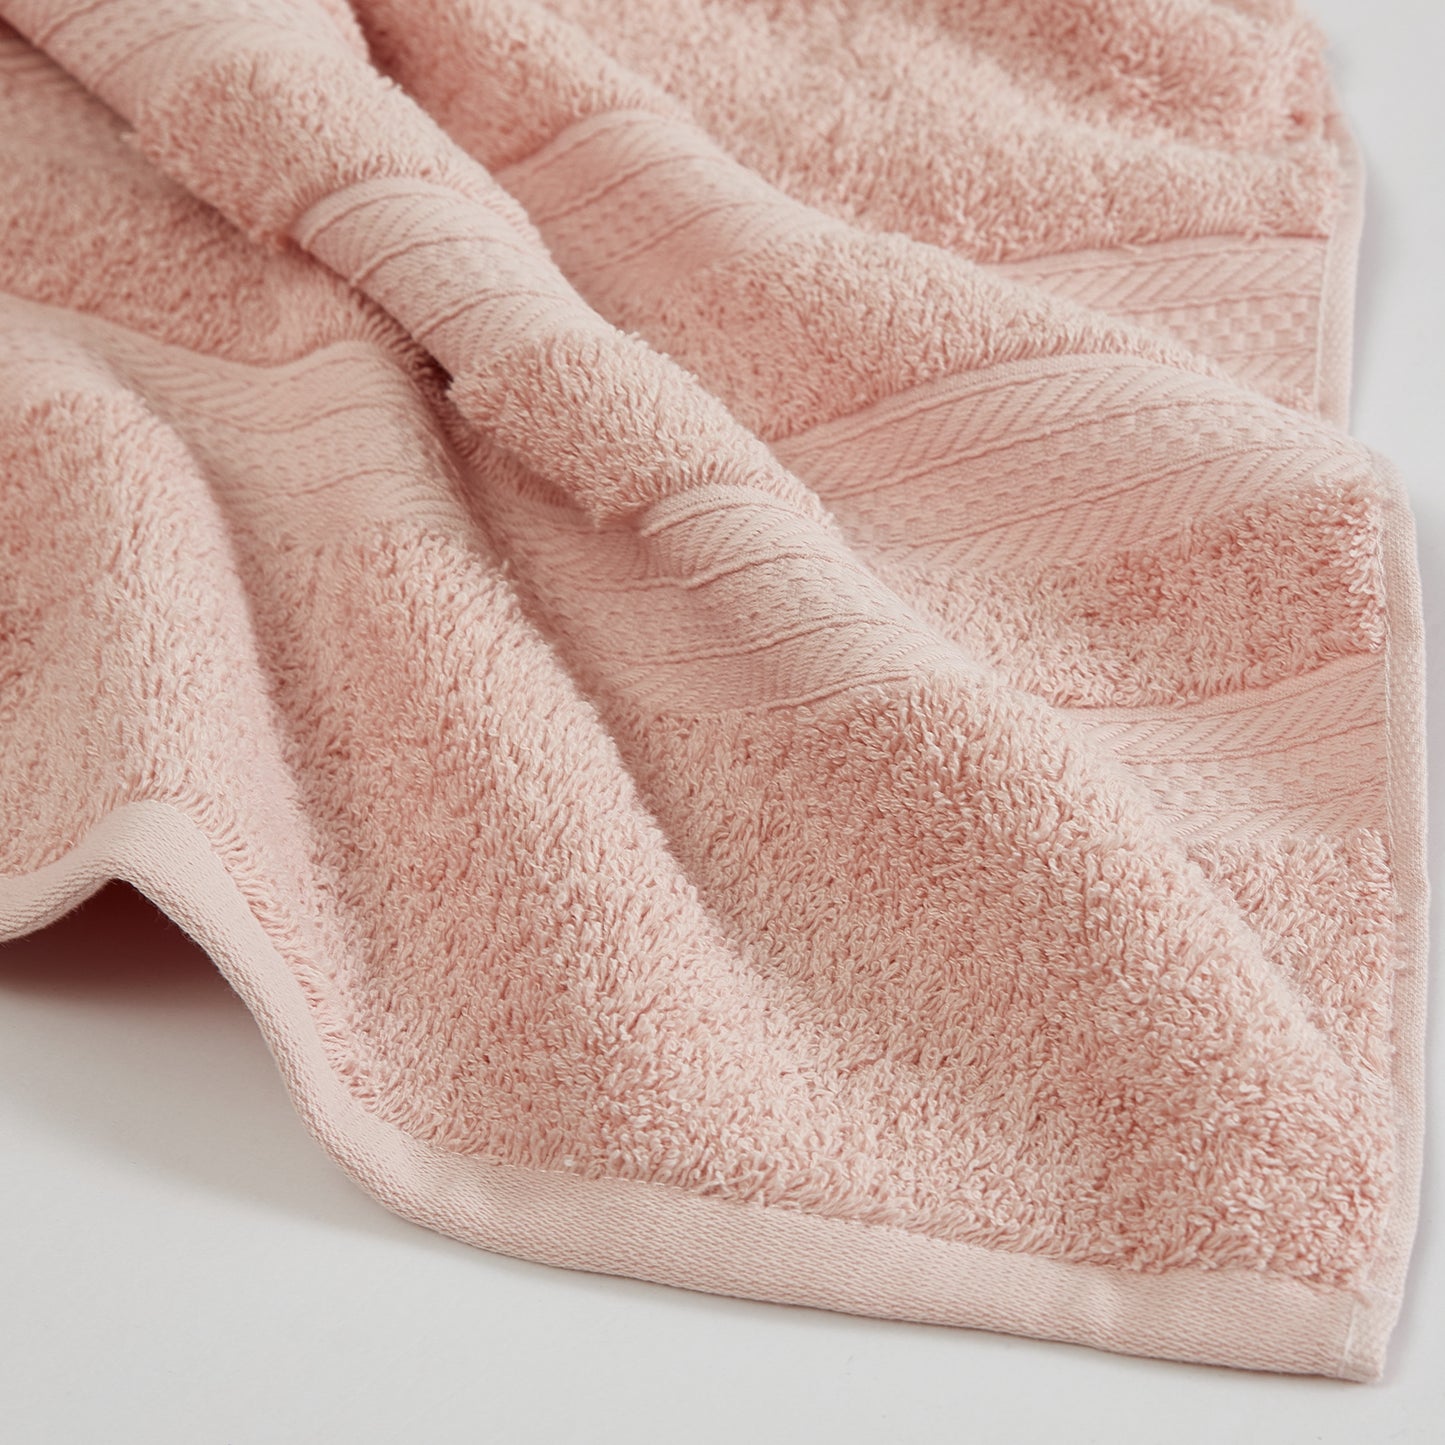 Extra Large Bath Towel - Oversized Ultra Bath Sheet - 100% Cotton - BLUSH COLOR